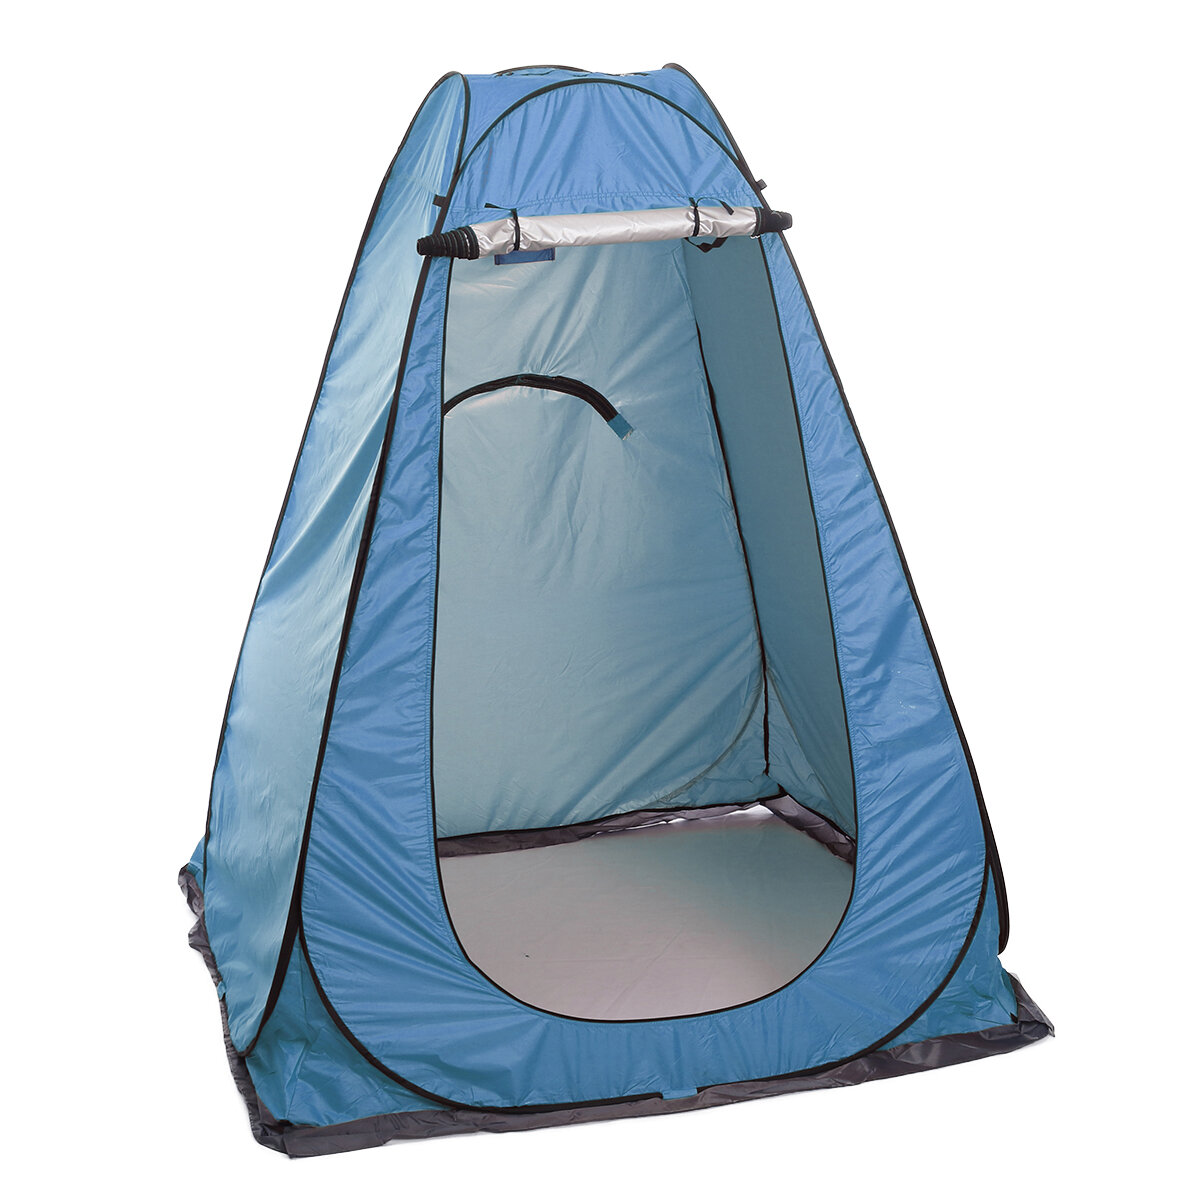 Abri de tente de douche pliable portable Tente de camping en plein air Salle de toilettes d'urgence